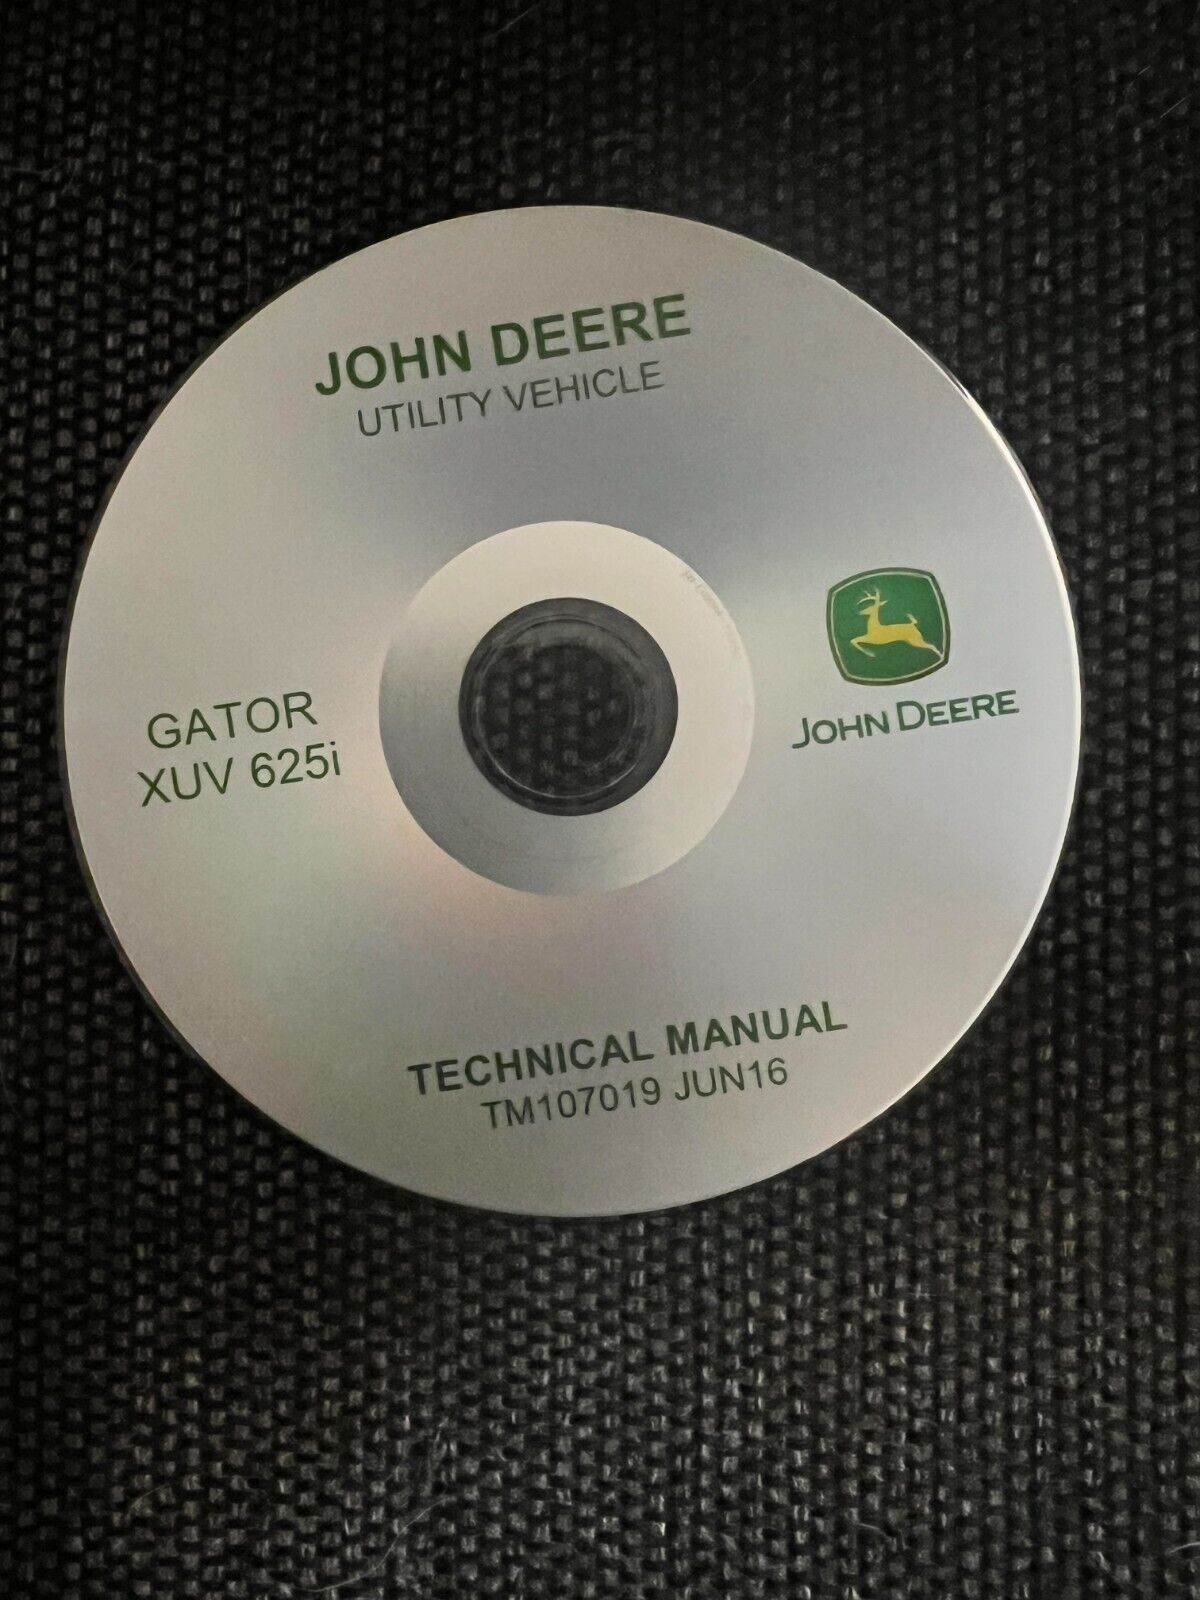 John Deere GATOR UTILITY XUV 625i Technical Service Repair Manual TM107019 CD